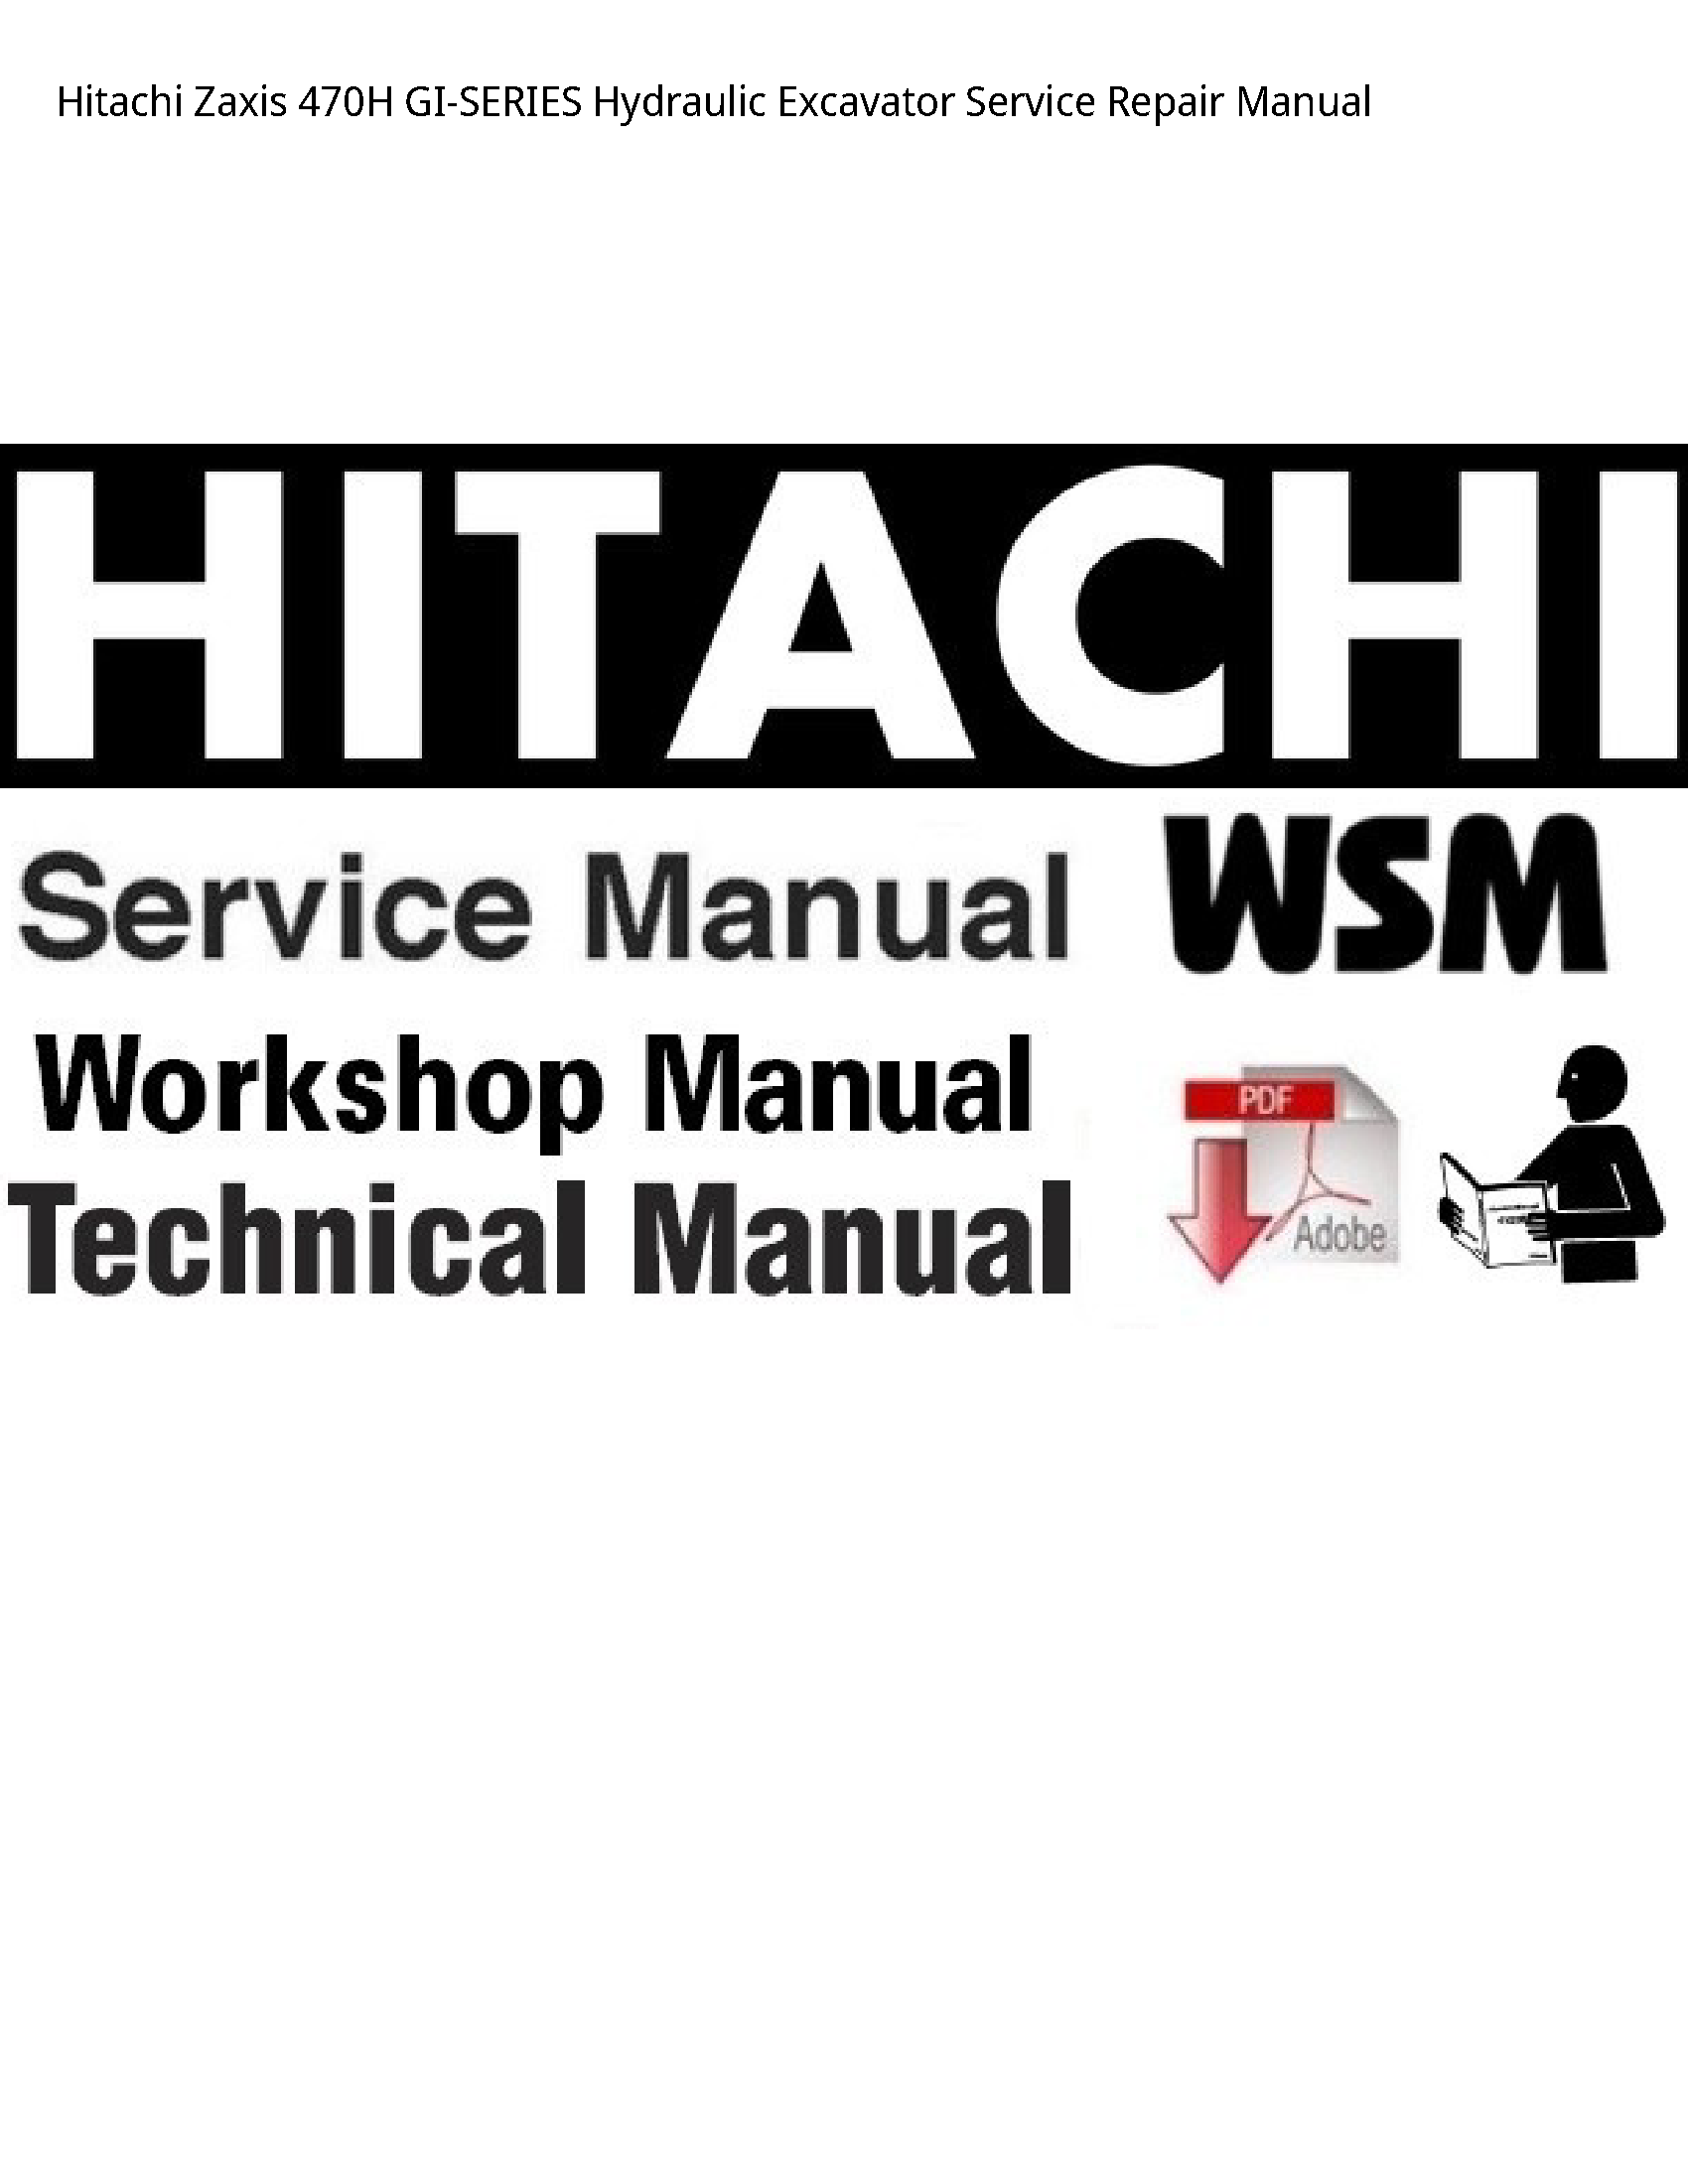 Hitachi 470H Zaxis GI-SERIES Hydraulic Excavator manual